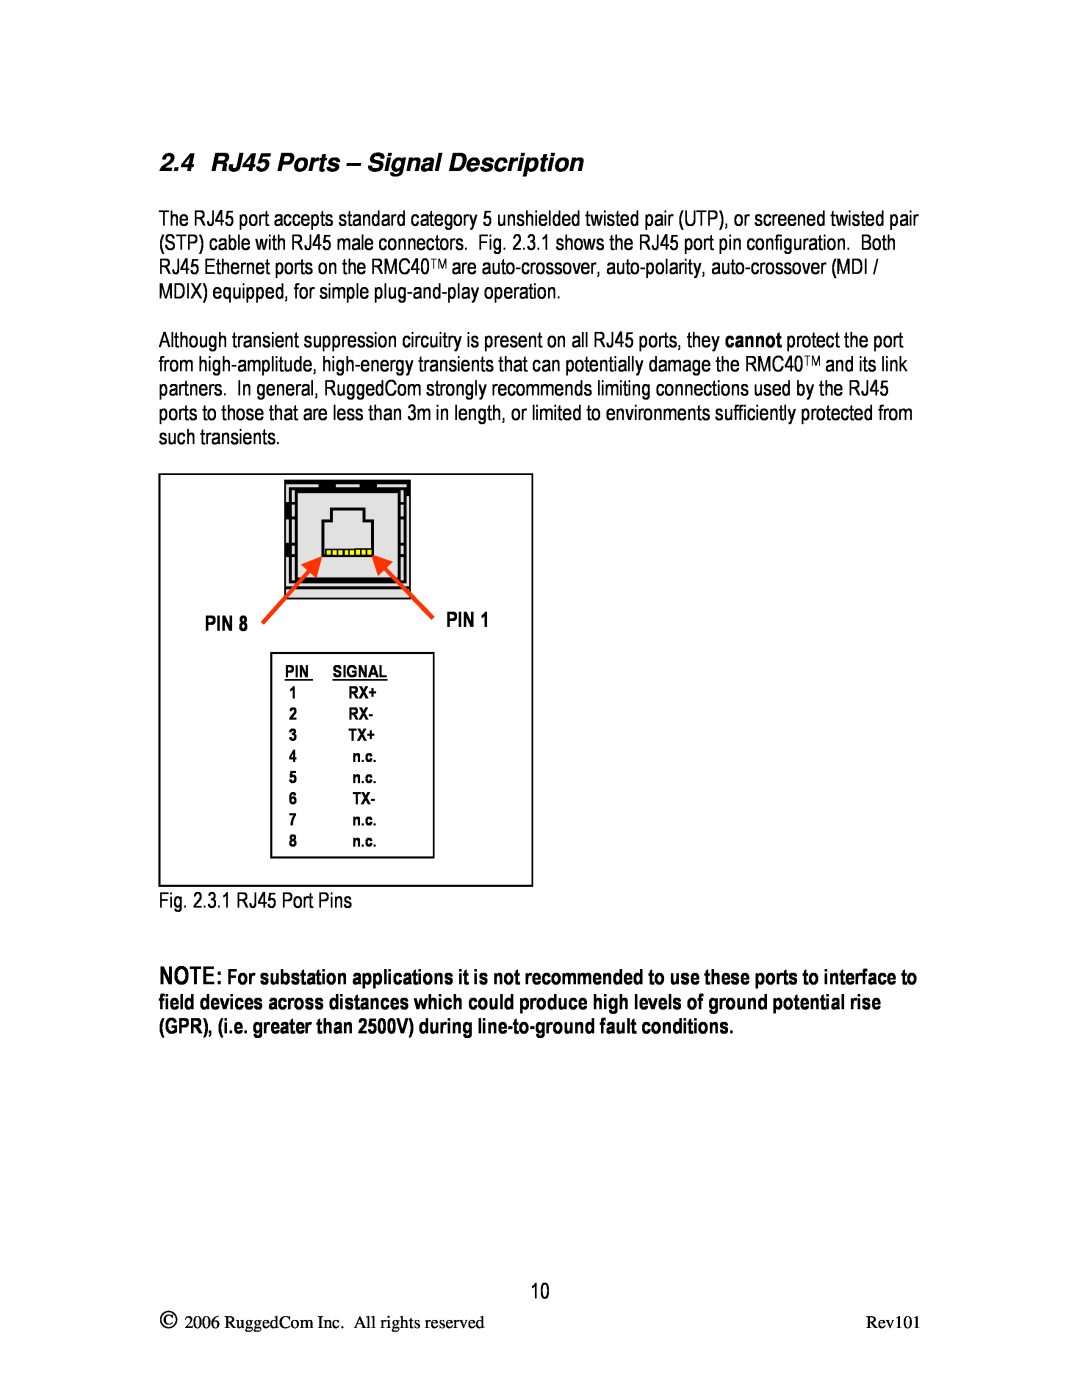 RuggedCom RMC40 manual 2.4 RJ45 Ports – Signal Description 